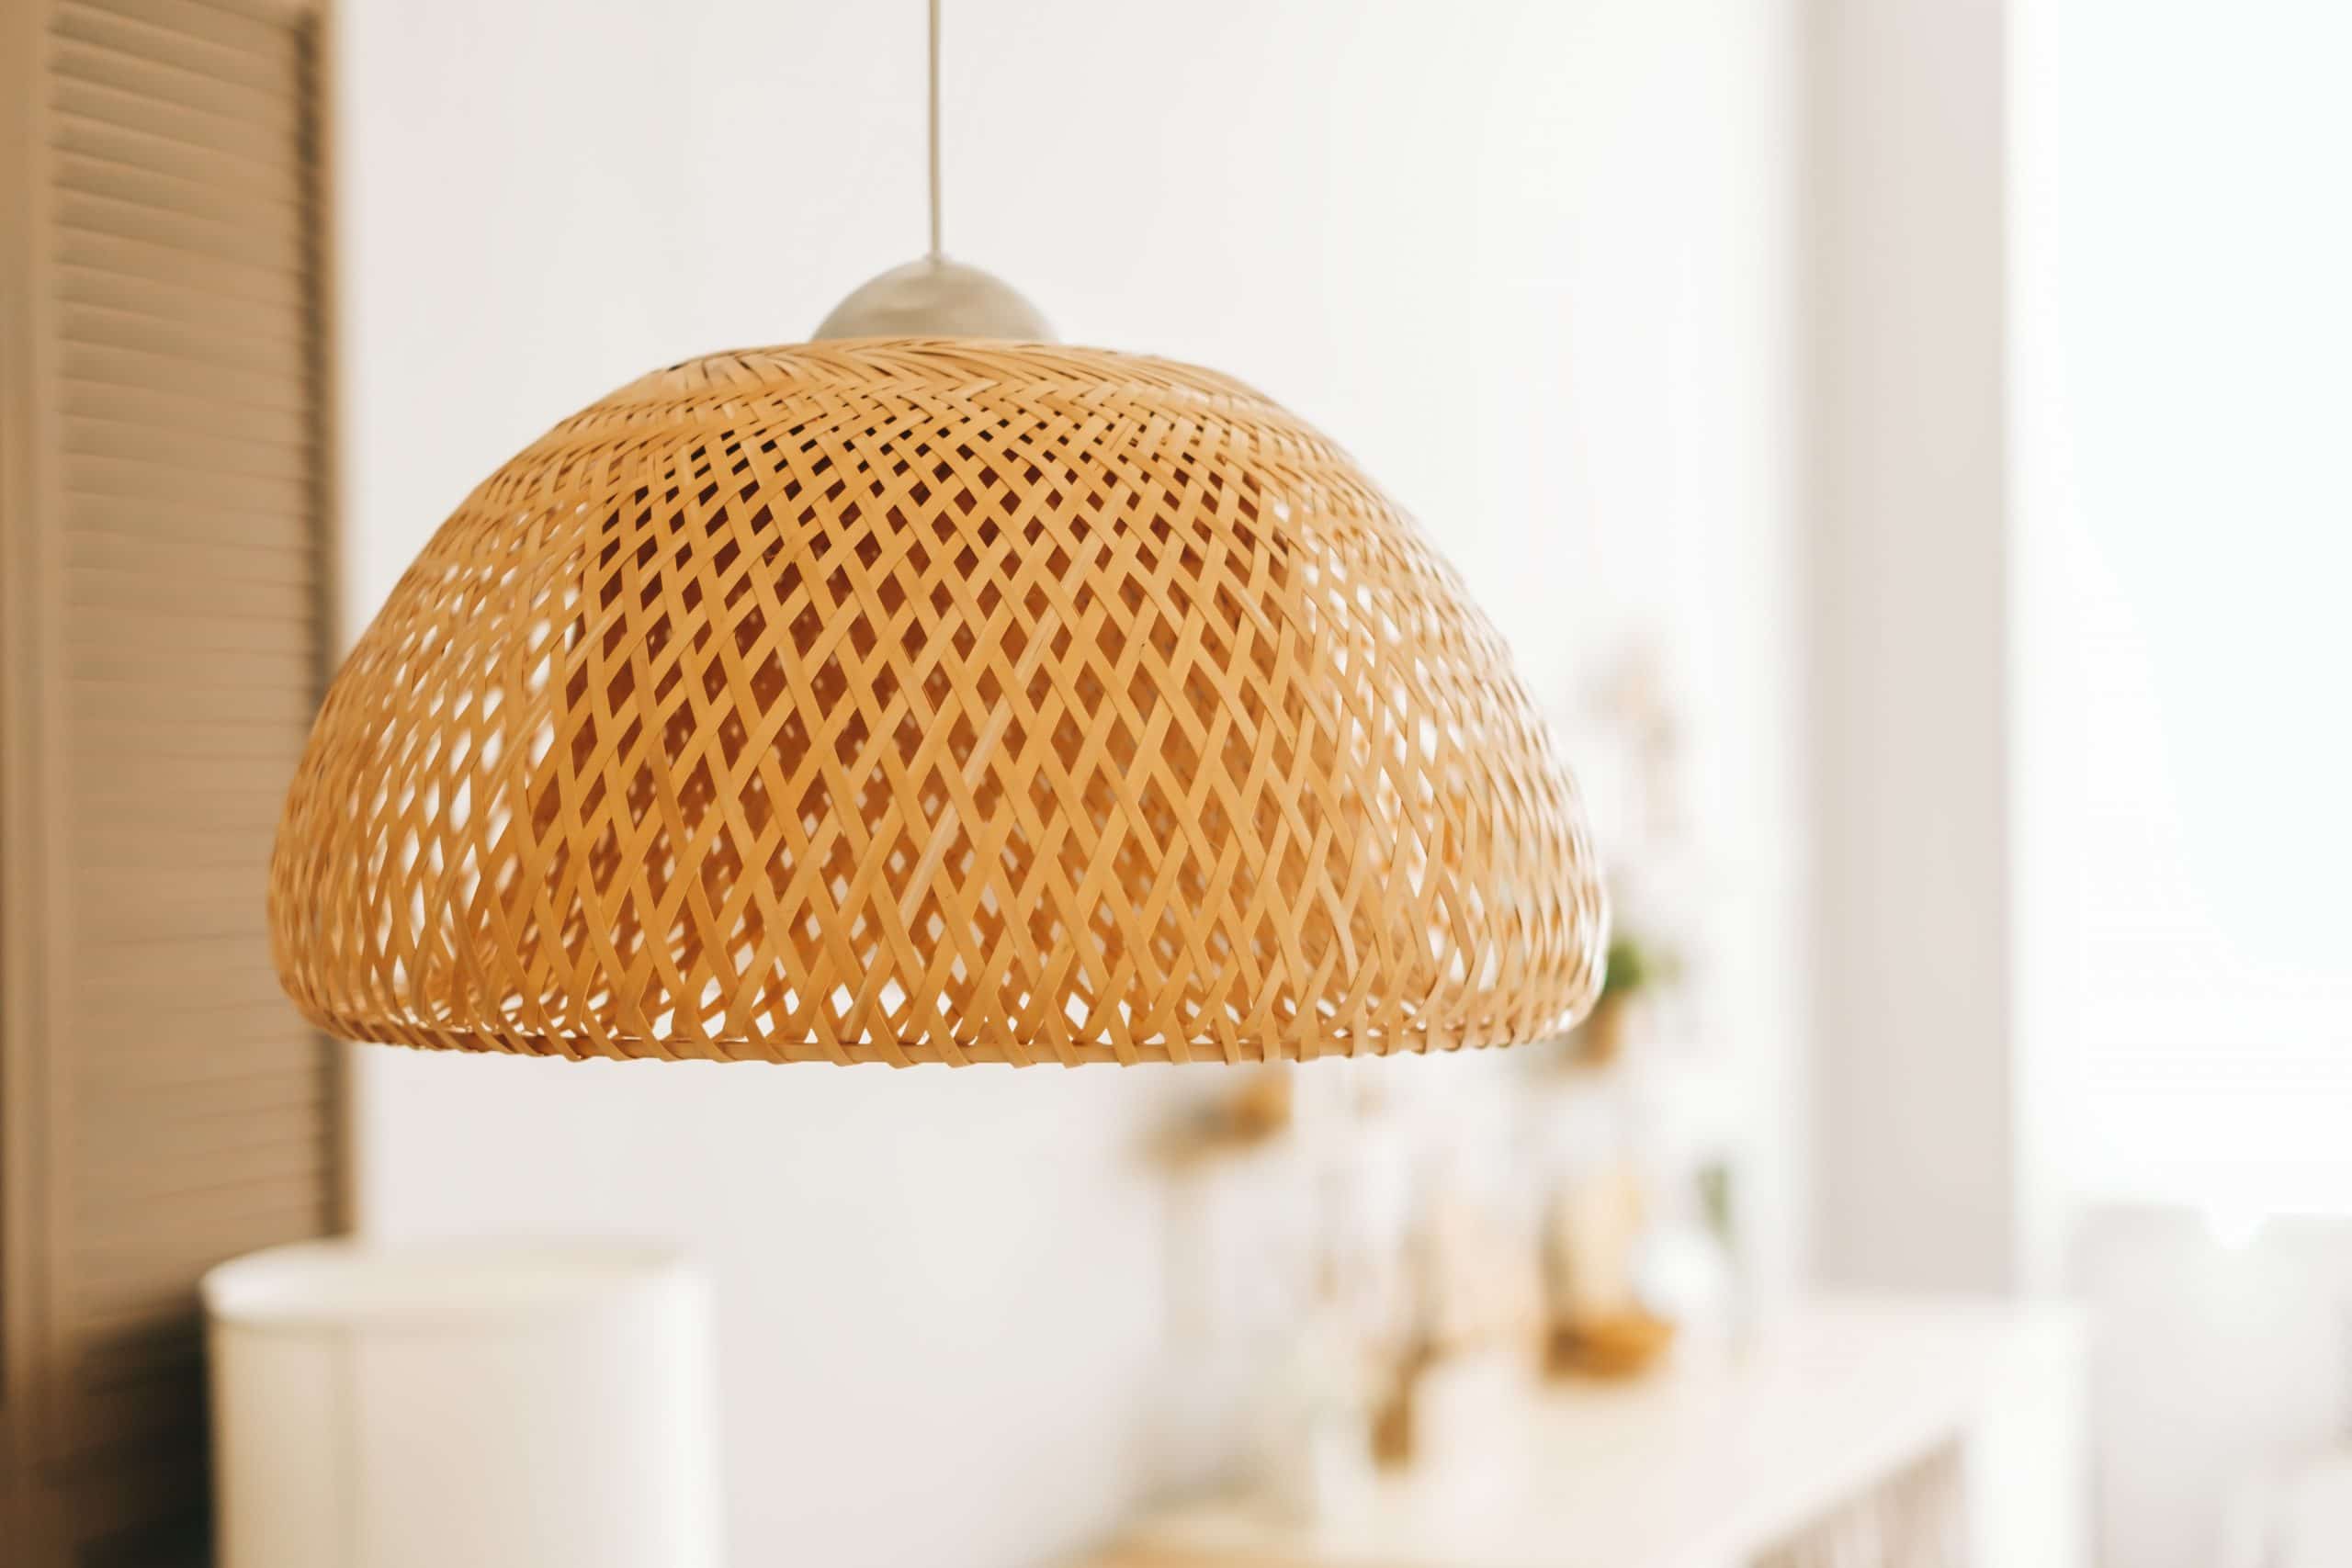 straw lampshade in modern living room eco friendl 2022 03 30 00 25 05 utc scaled